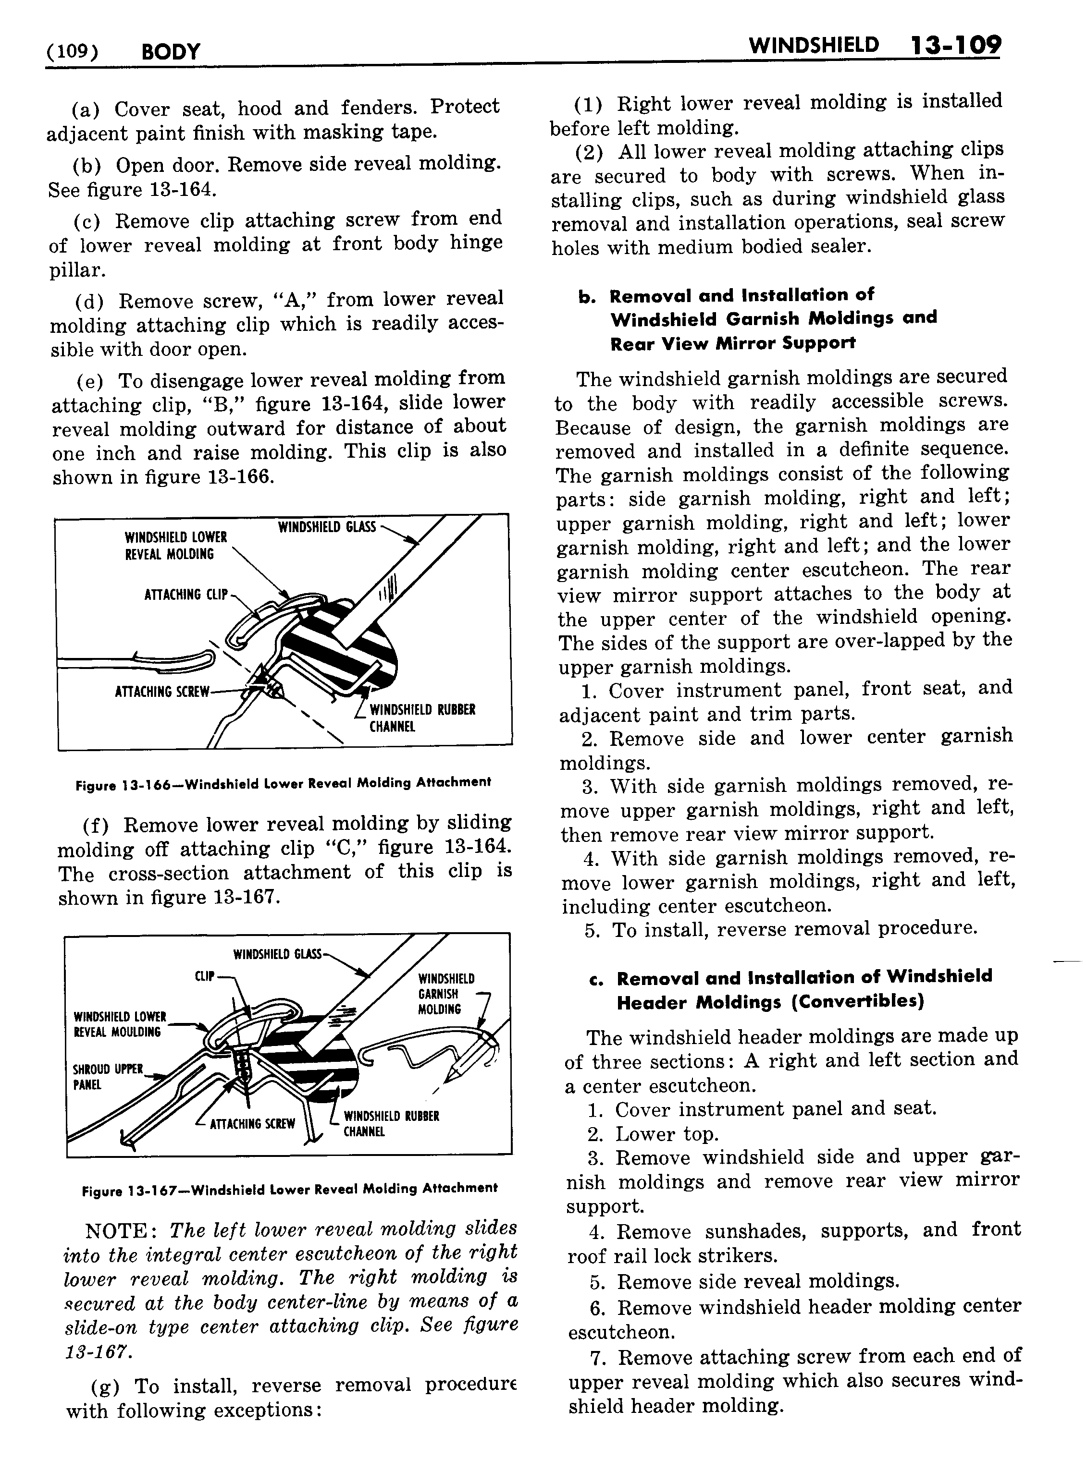 n_1957 Buick Body Service Manual-111-111.jpg